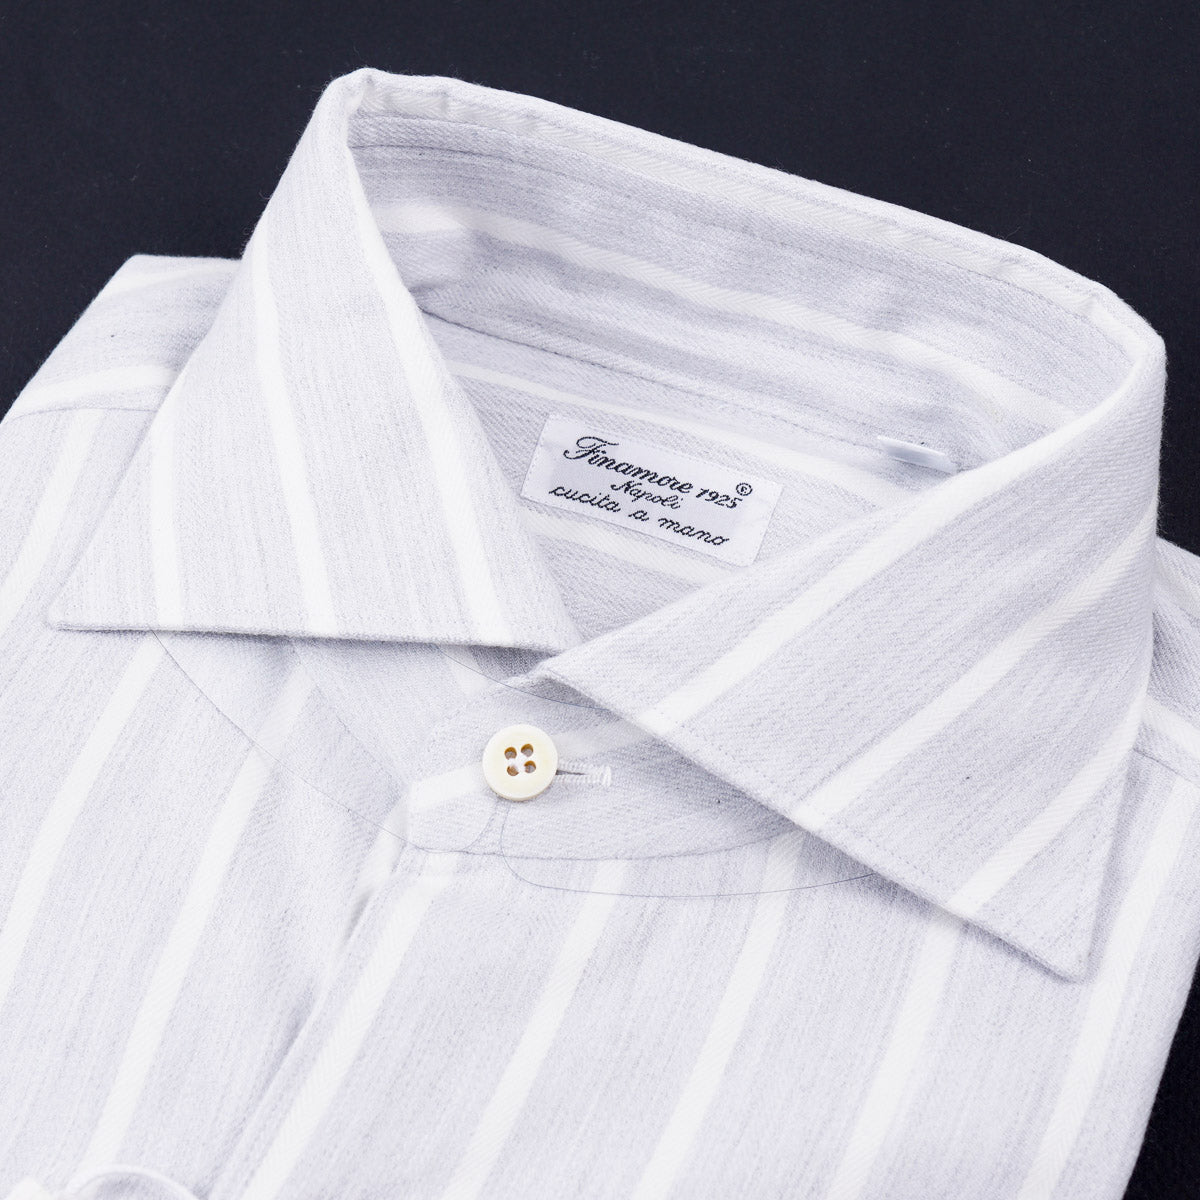 Finamore Extra-Soft Cotton-Blend Shirt - Top Shelf Apparel